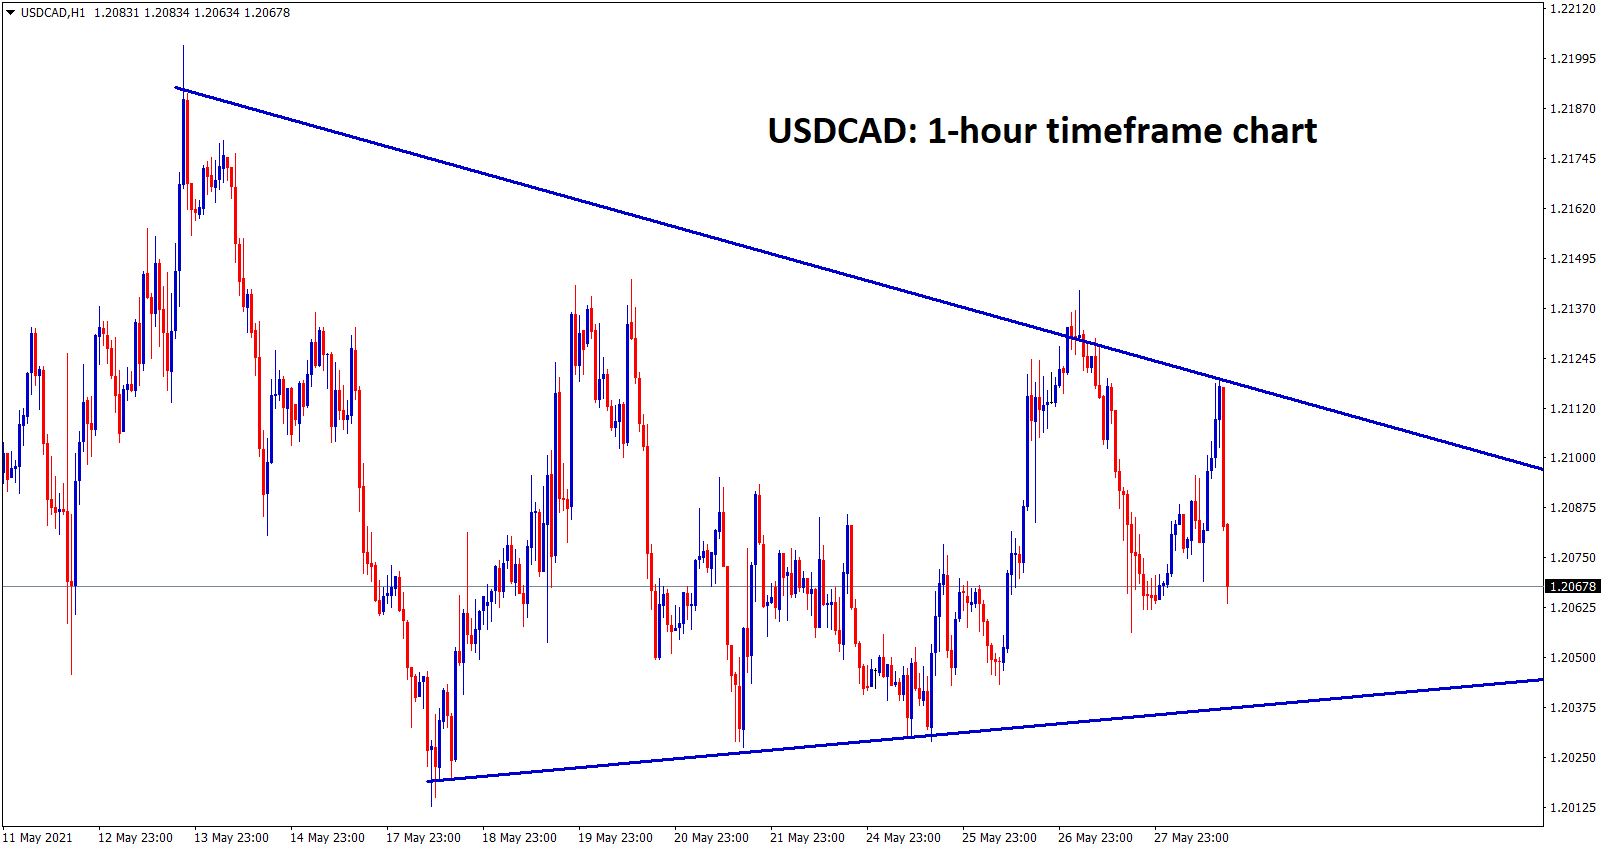 USDCAD moving in a symmetrical pattern range wait for breakout